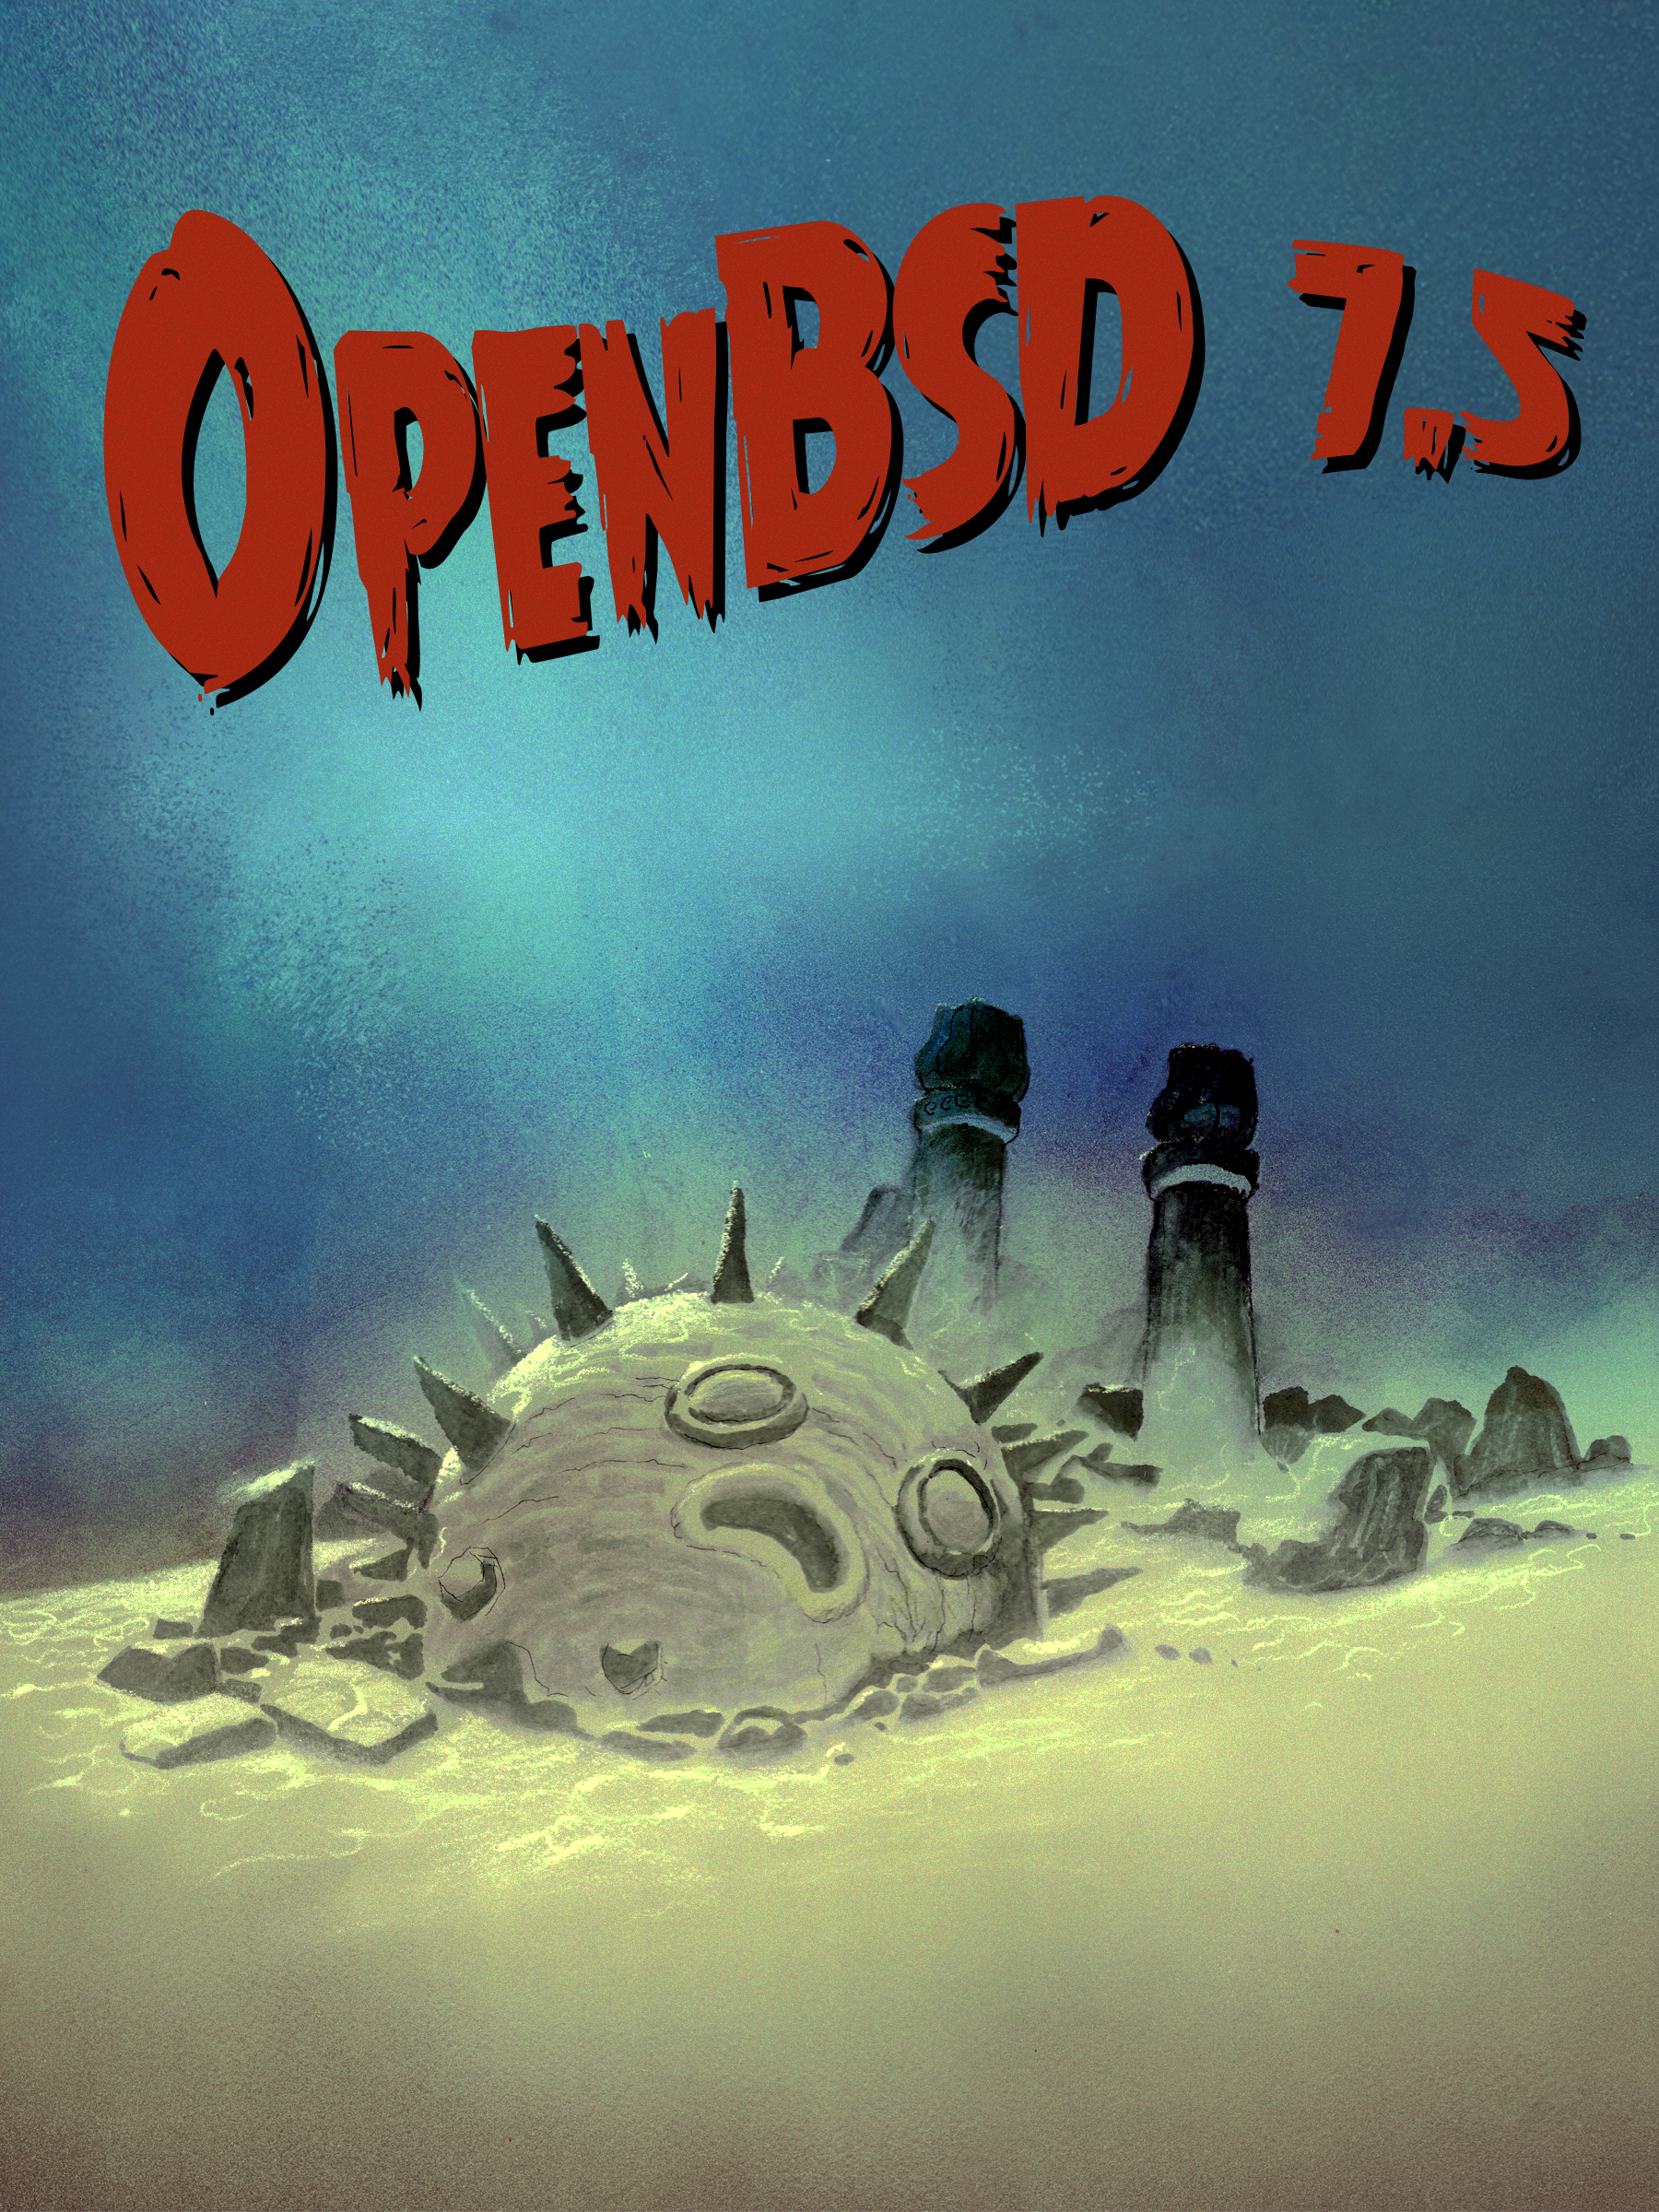 Media asset in full size related to 3dfxzone.it news item entitled as follows: OpenBSD, rilasciata la versione 7.5 del Sistema Operativo BSD derivato da Unix | Image Name: news35465_OpenBSD_7.5_1.jpg